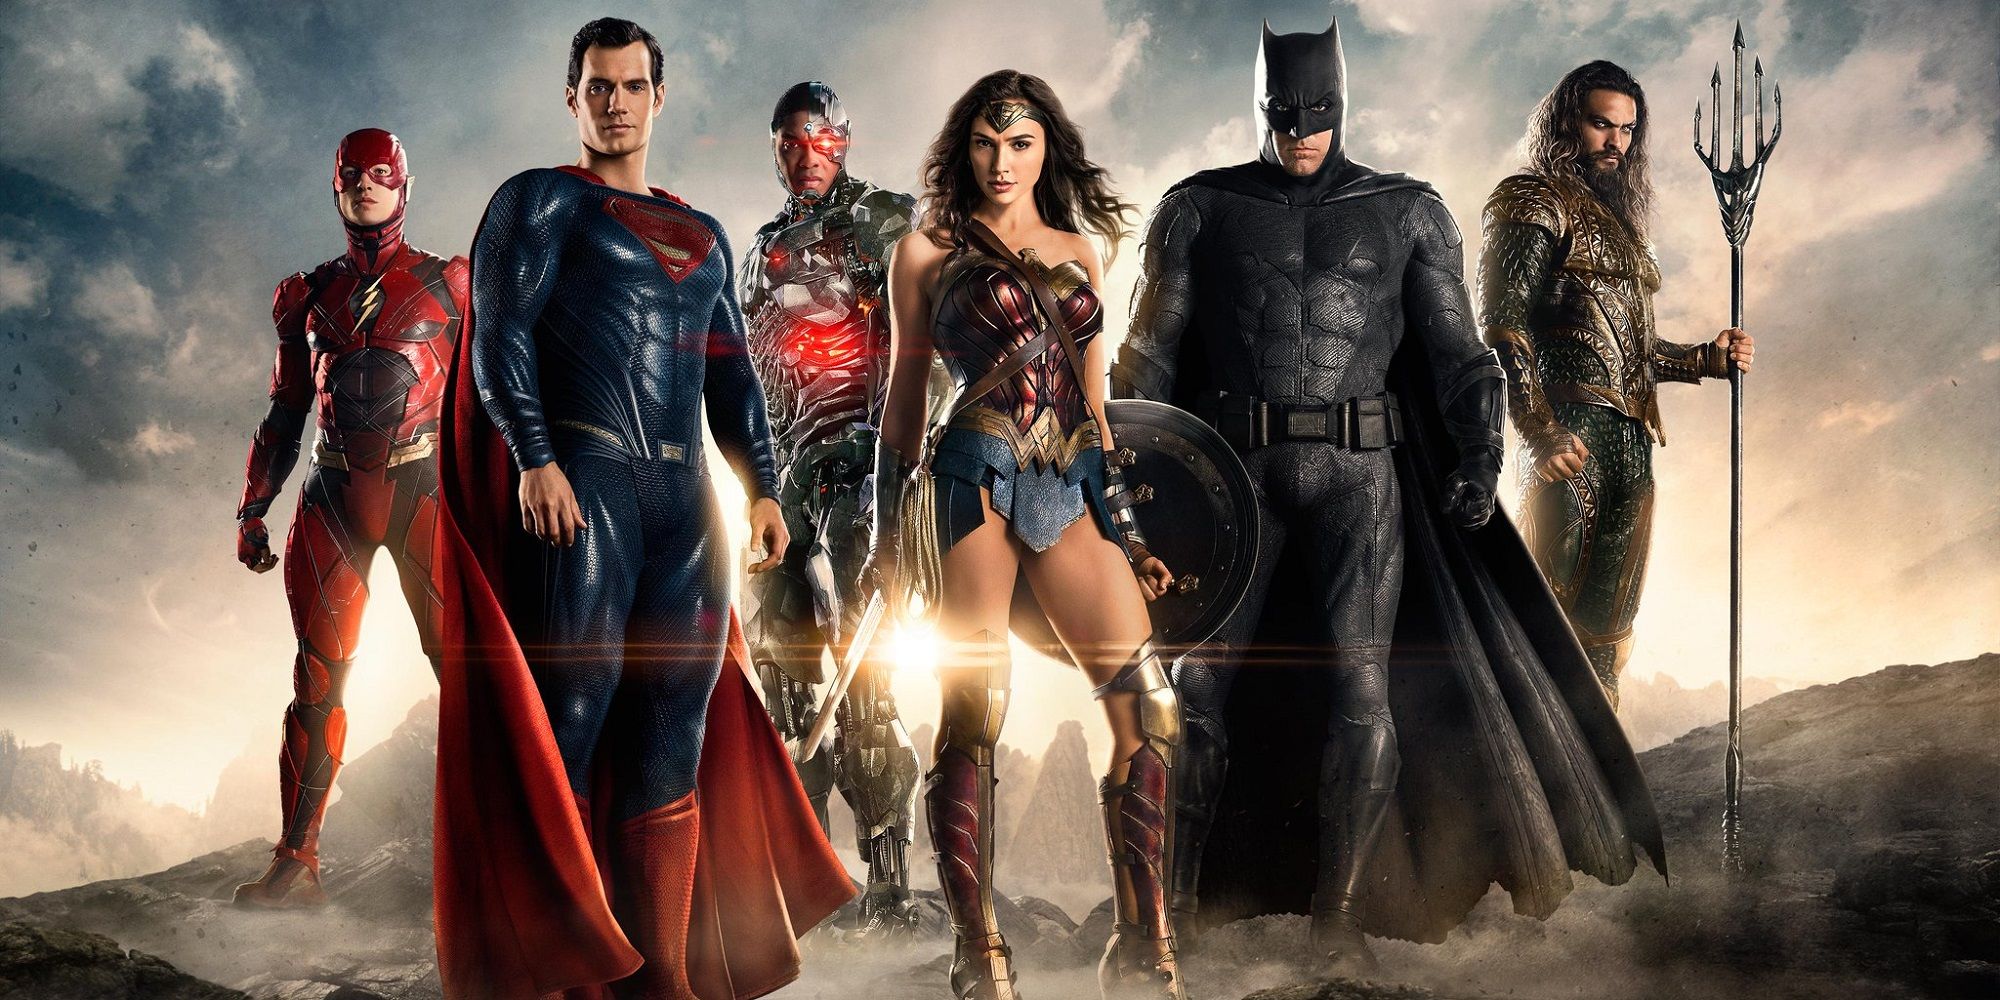 Justice League cast 2017